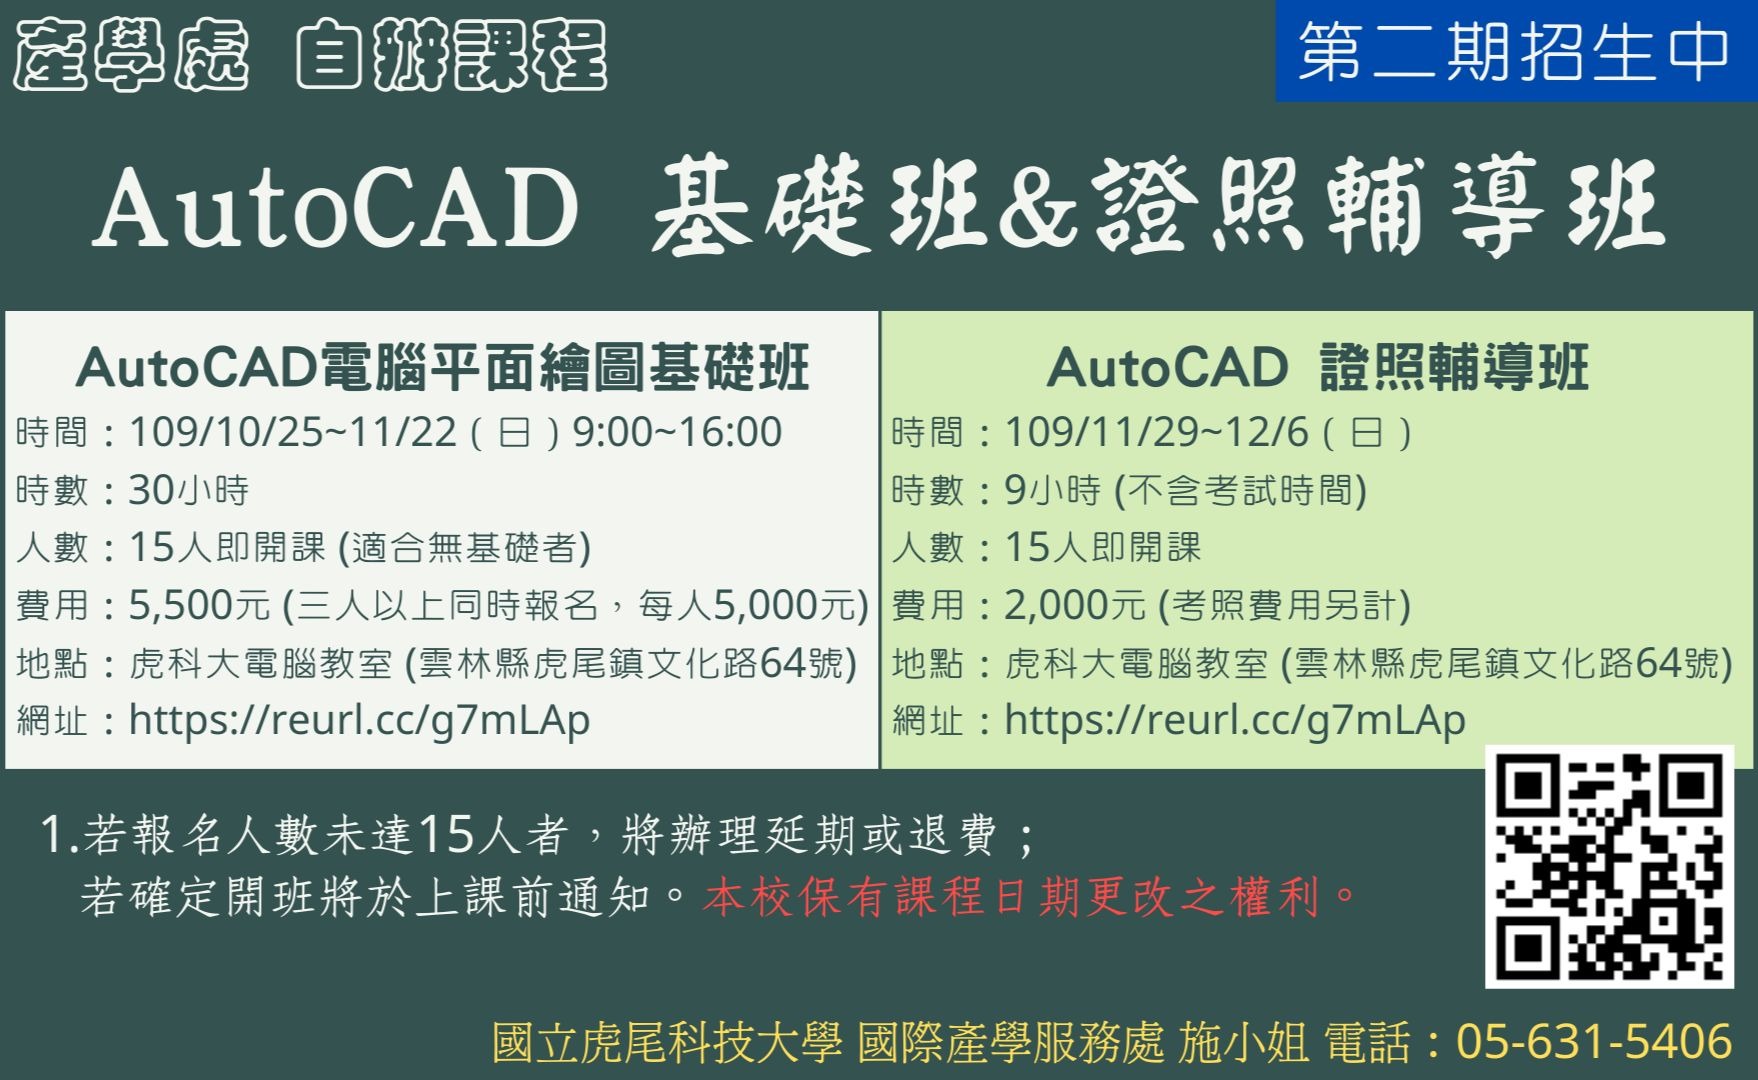 AutoCAD 基礎班證照輔導班